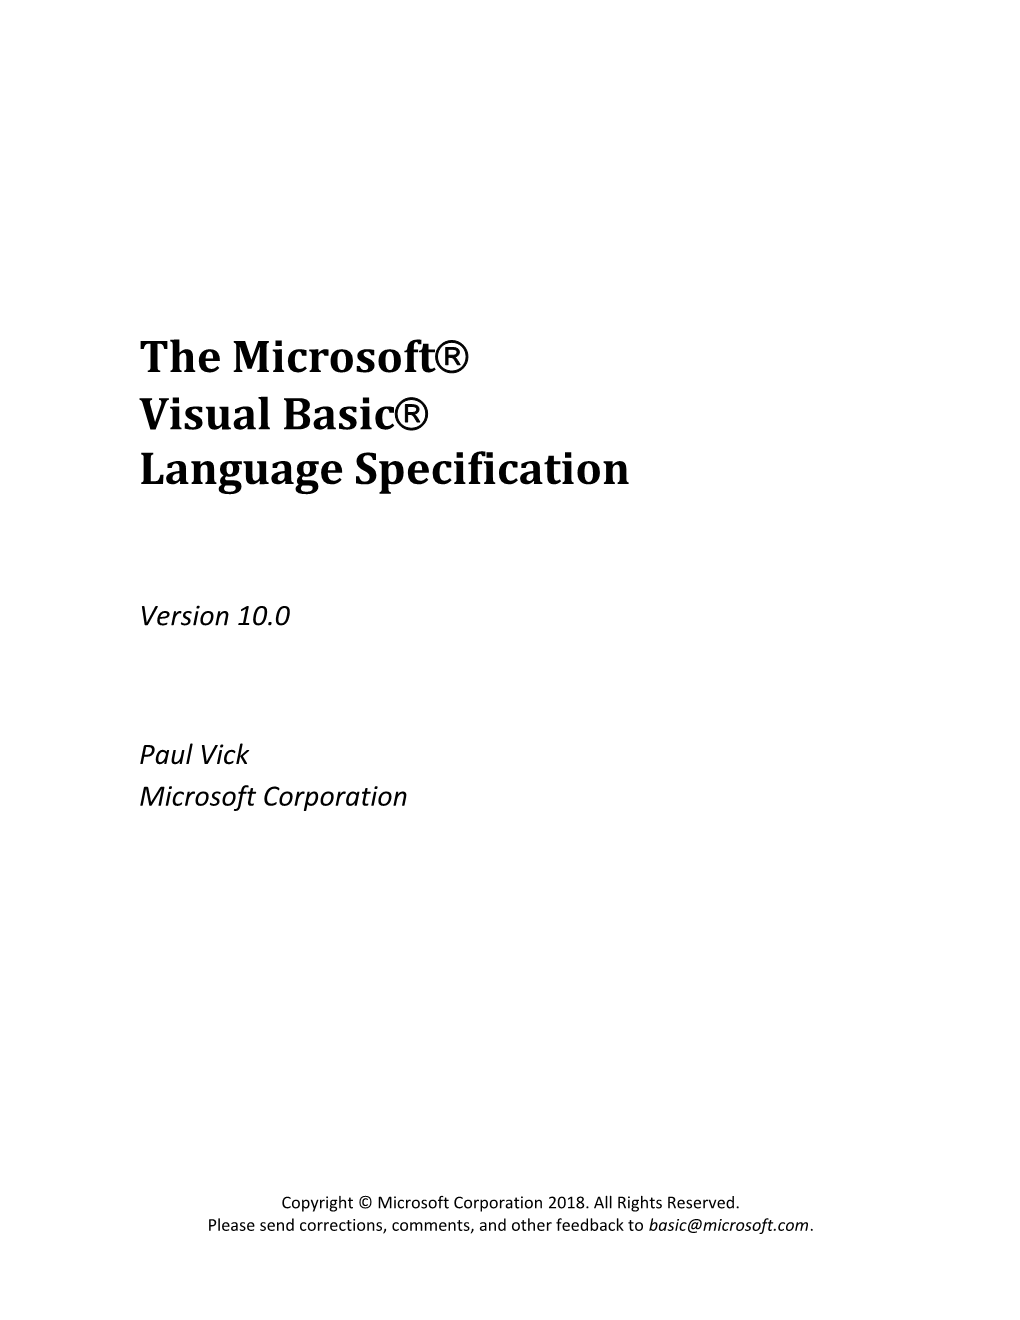 The Microsoft Visual Basic Language Specification